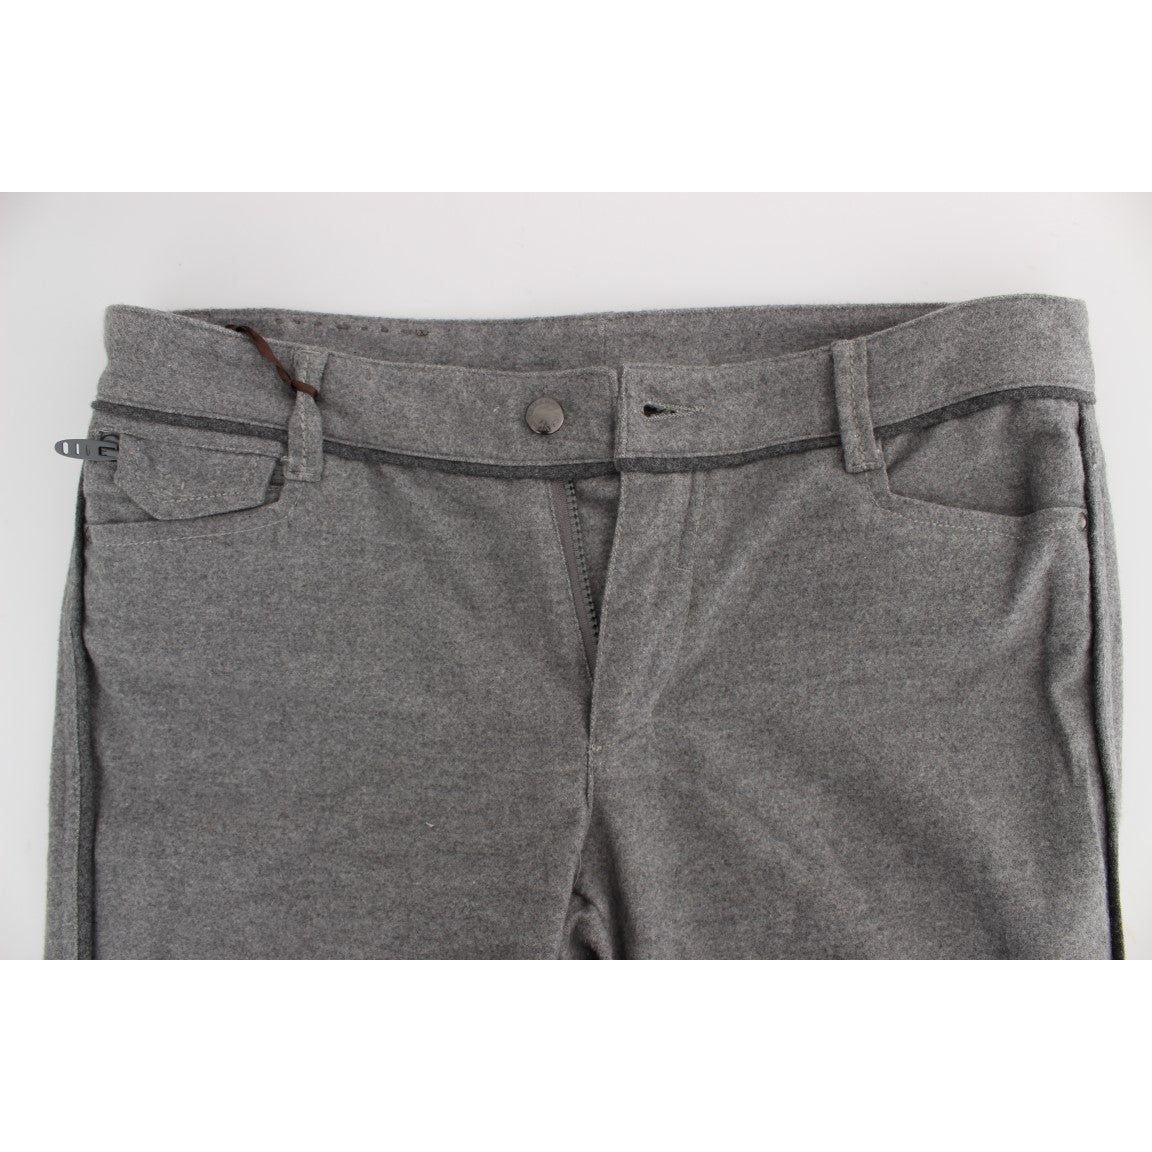 Ermanno Scervino Chic Gray Casual Cotton Pants gray-cotton-straight-fit-casual-pants 330370-gray-cotton-straight-fit-casual-pants-4.jpg